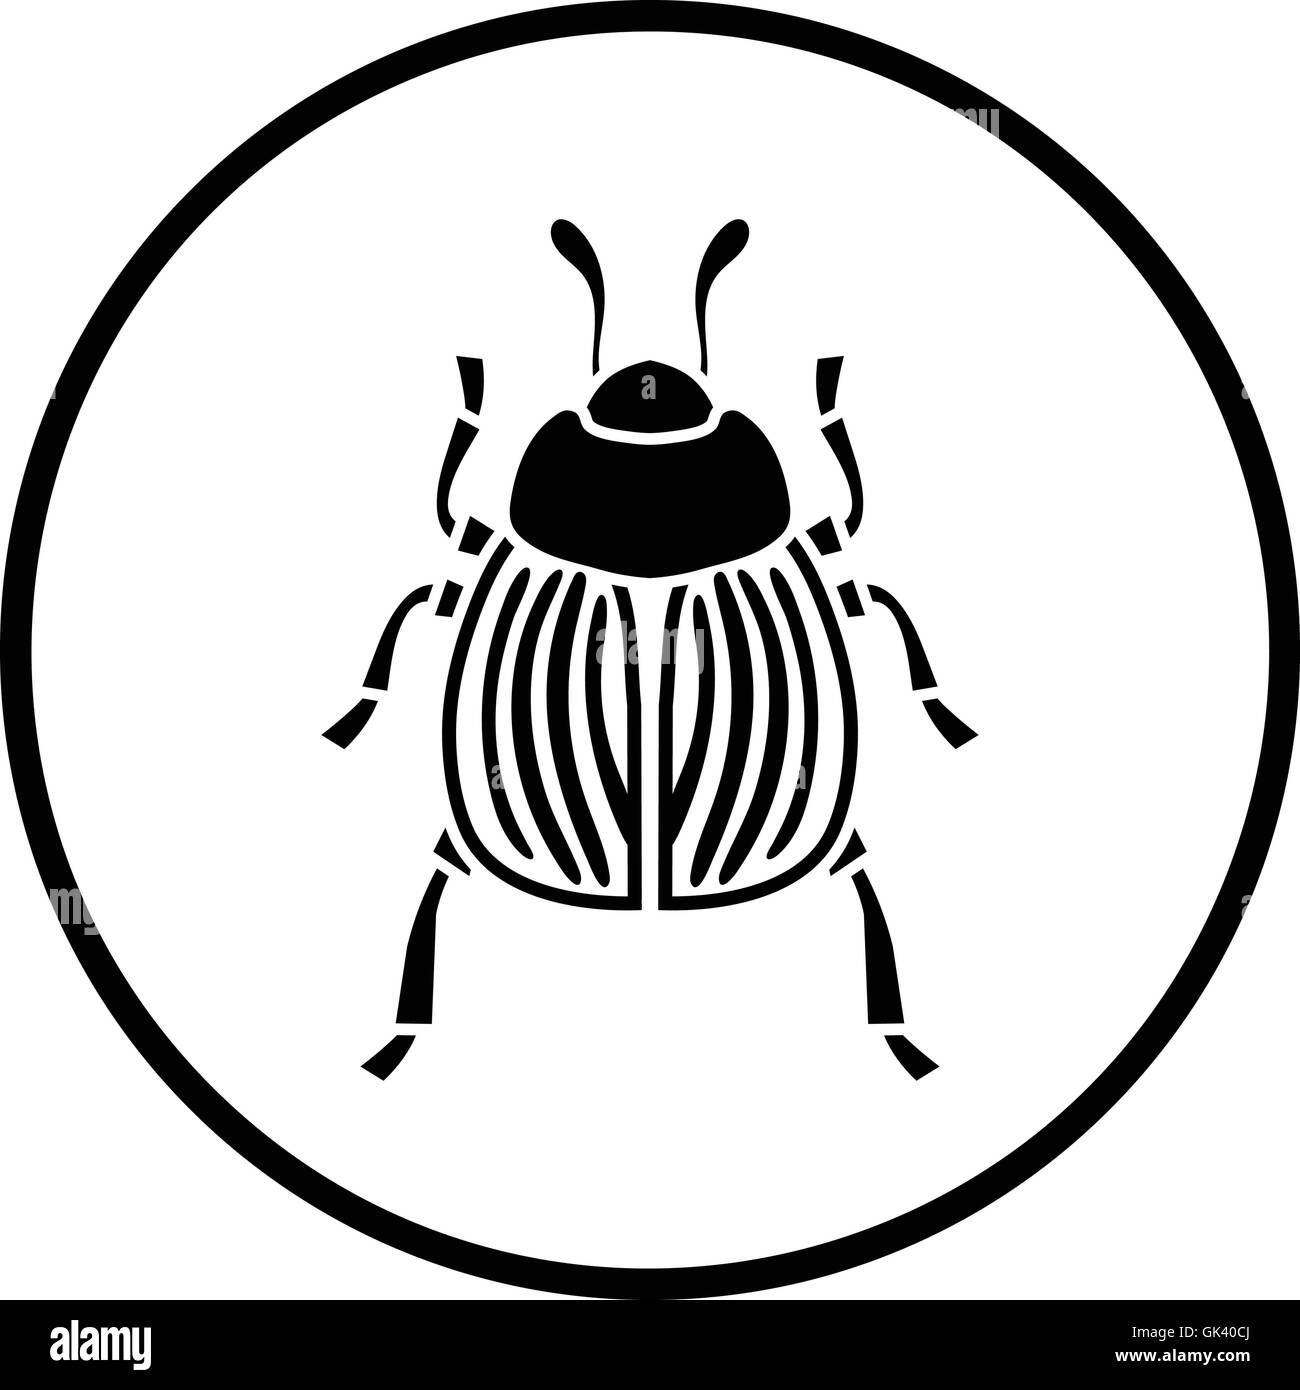 Colorado beetle icona. Cerchio sottile design. Illustrazione Vettoriale. Illustrazione Vettoriale